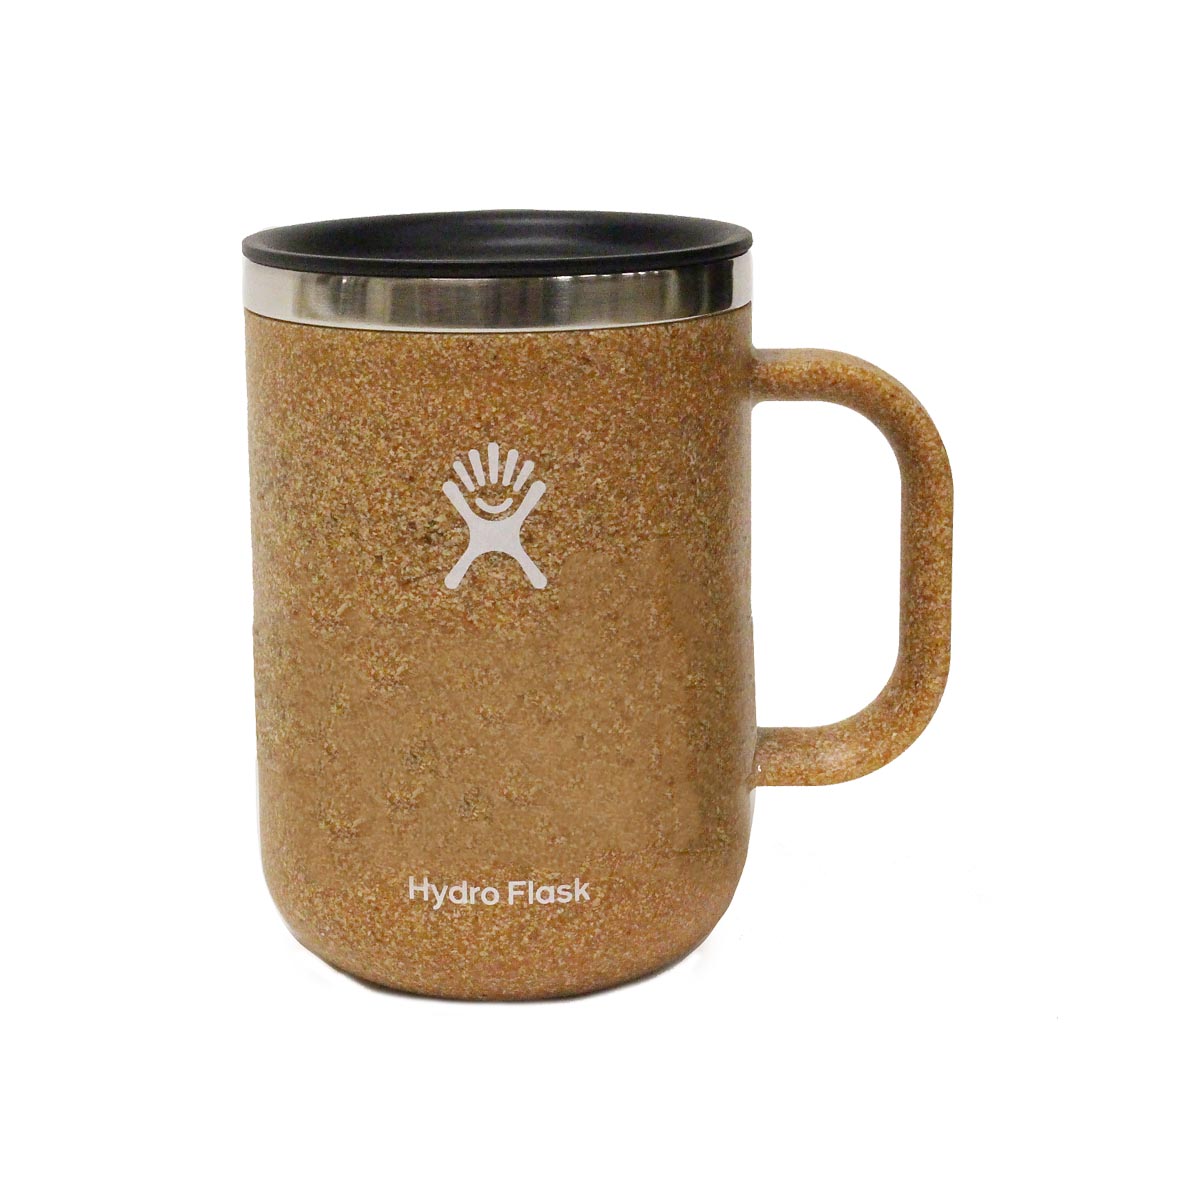 Hydro Flask Coffee Mug, 24 oz.